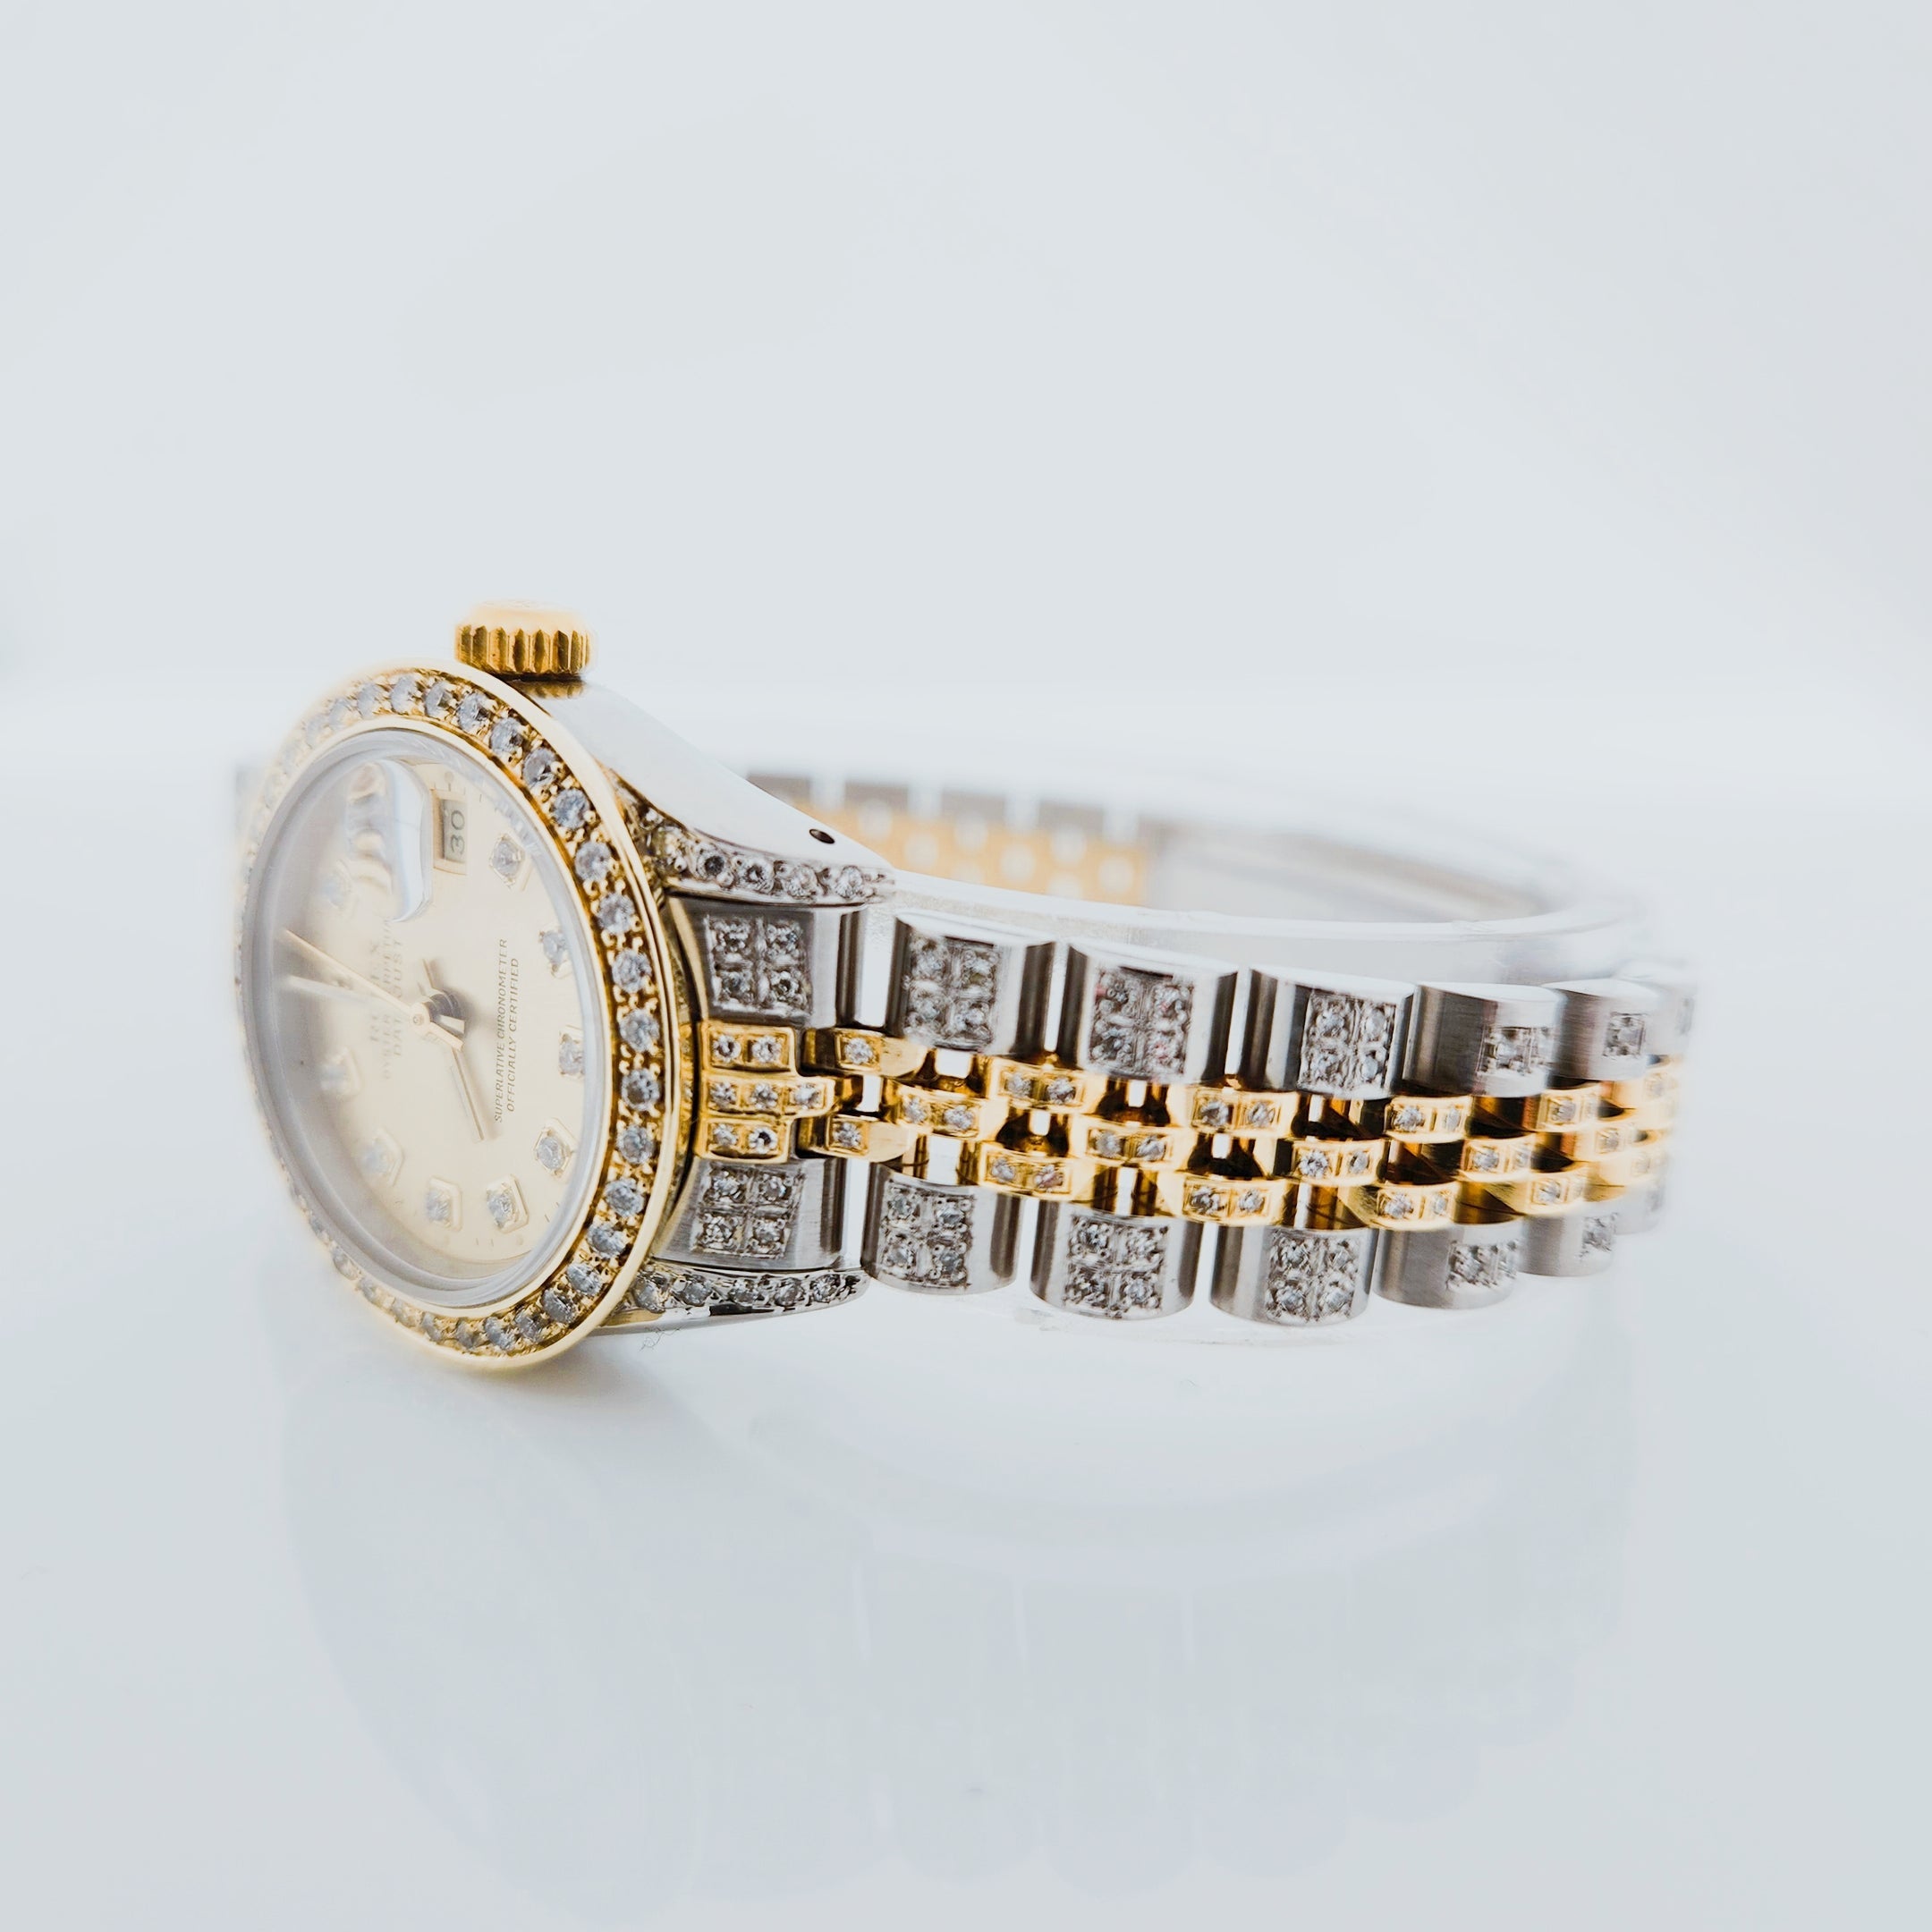 Ladies Rolex 26mm DateJust 18K Gold / Stainless Steel Wristwatch w/ Diamond B&, Diamond Dial & Diamond Bezel. (Pre-Owned)